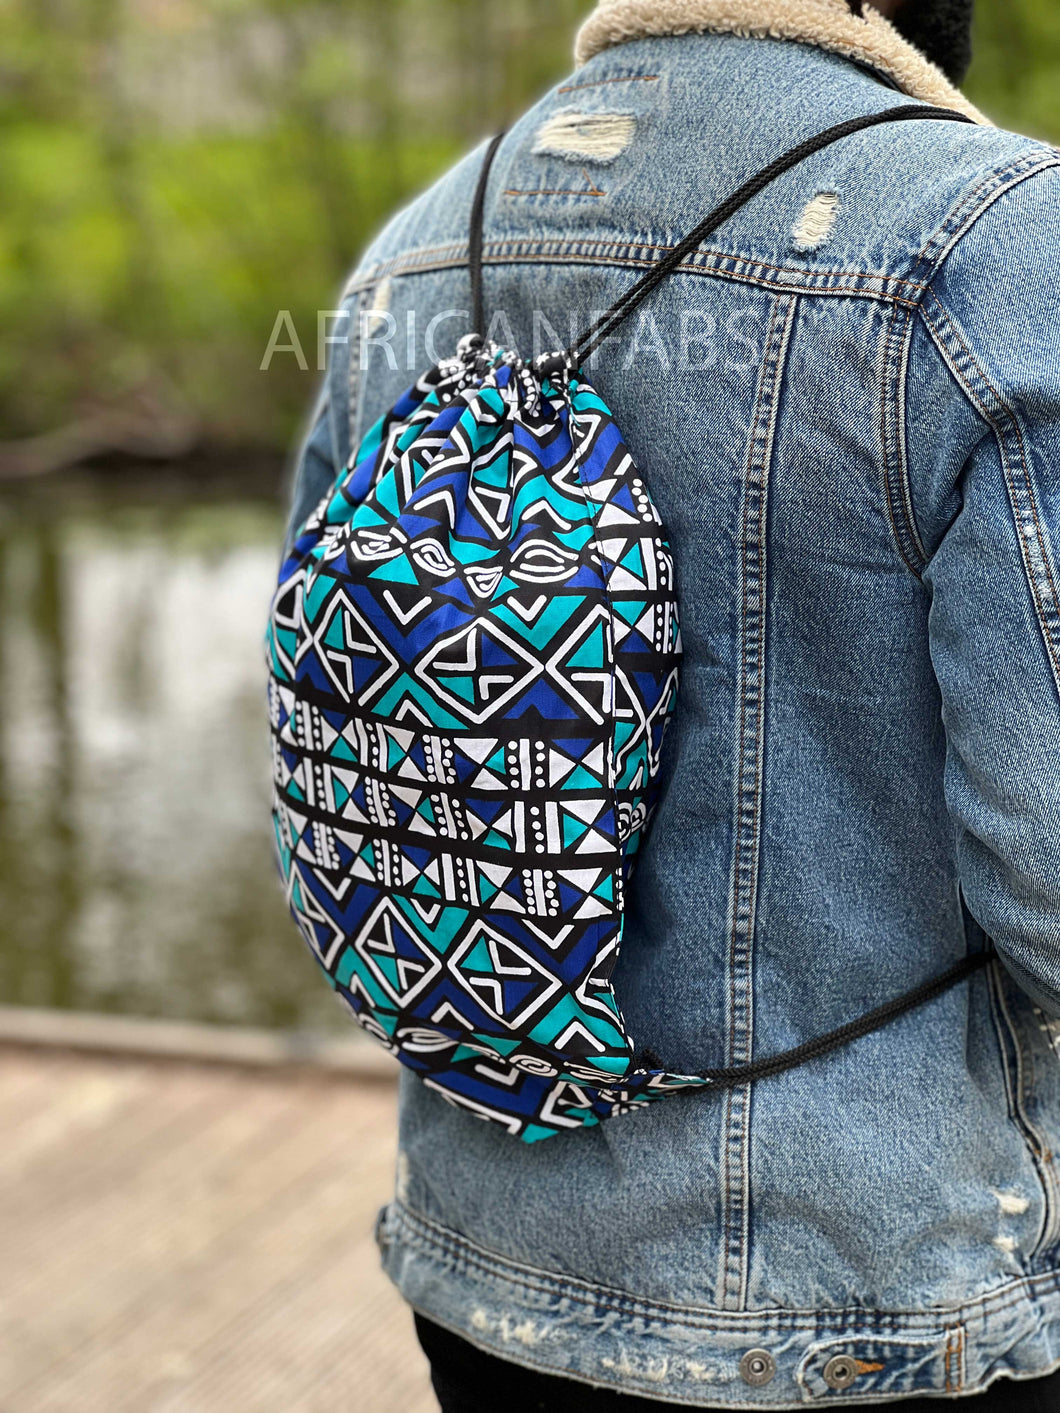 African Print Drawstring Bag / Gym Sack / School bag / Ankara Backpack / Festival Bag -  Blue bogolan